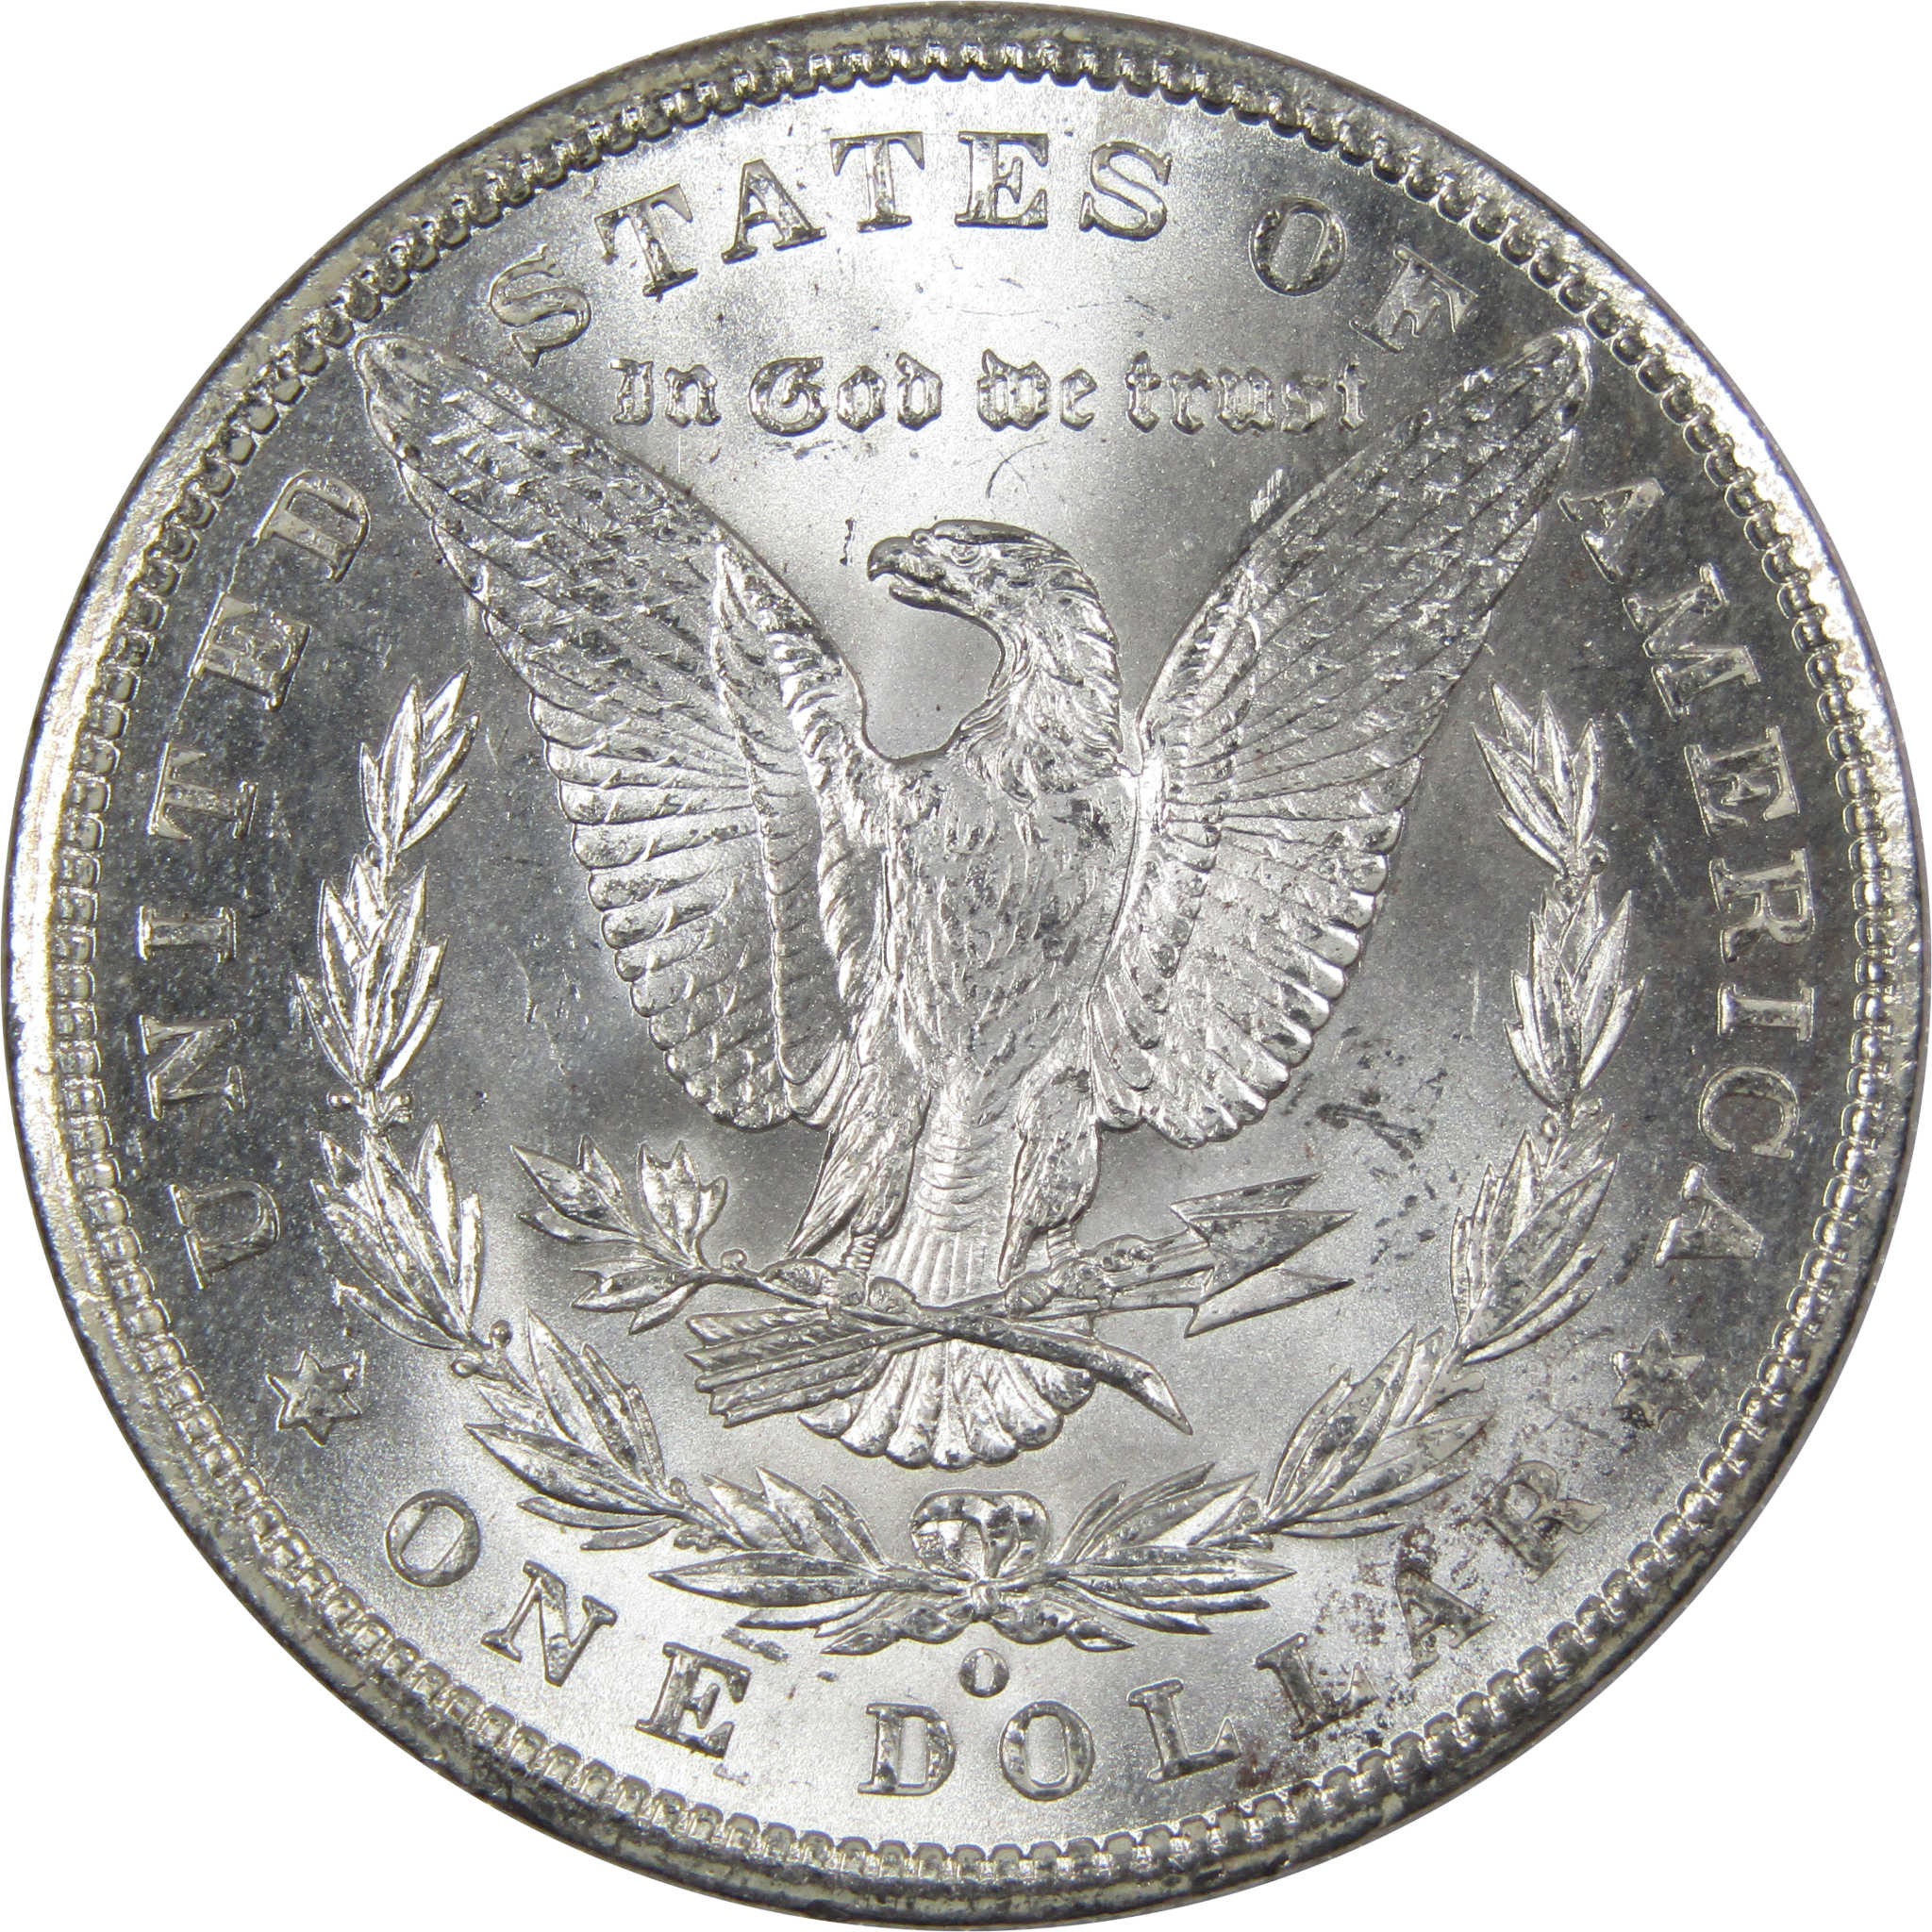 1900 O Morgan Dollar BU Uncirculated Mint State 90% Silver SKU:IPC9786 - Morgan coin - Morgan silver dollar - Morgan silver dollar for sale - Profile Coins &amp; Collectibles